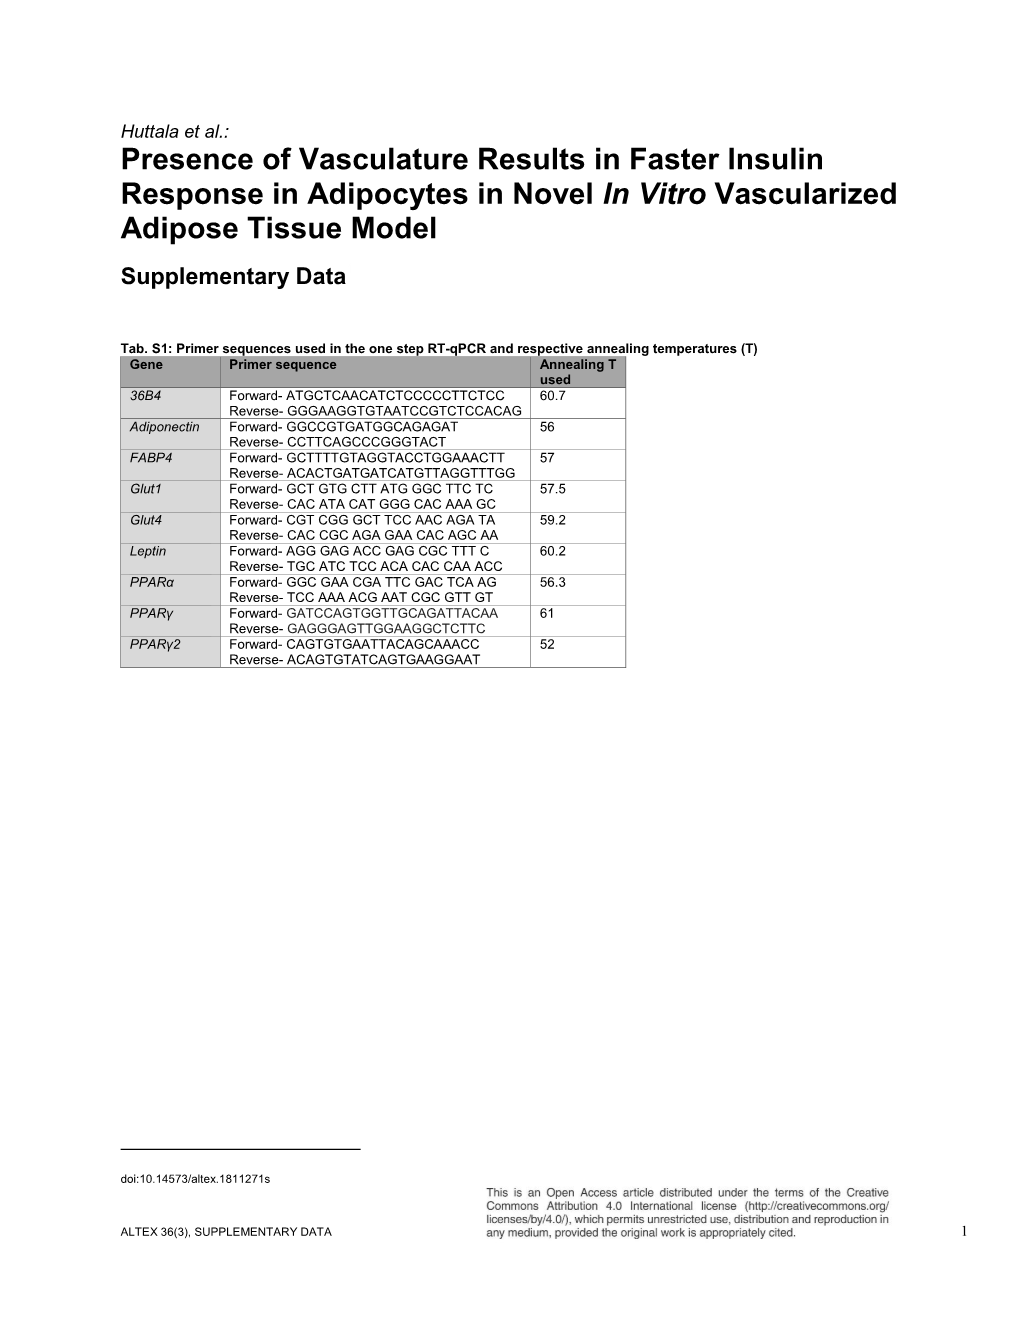 Presence of Vasculature Results in Faster Insulin Response in Adipocytes in Novel in Vitro Vascularized Adipose Tissue Model